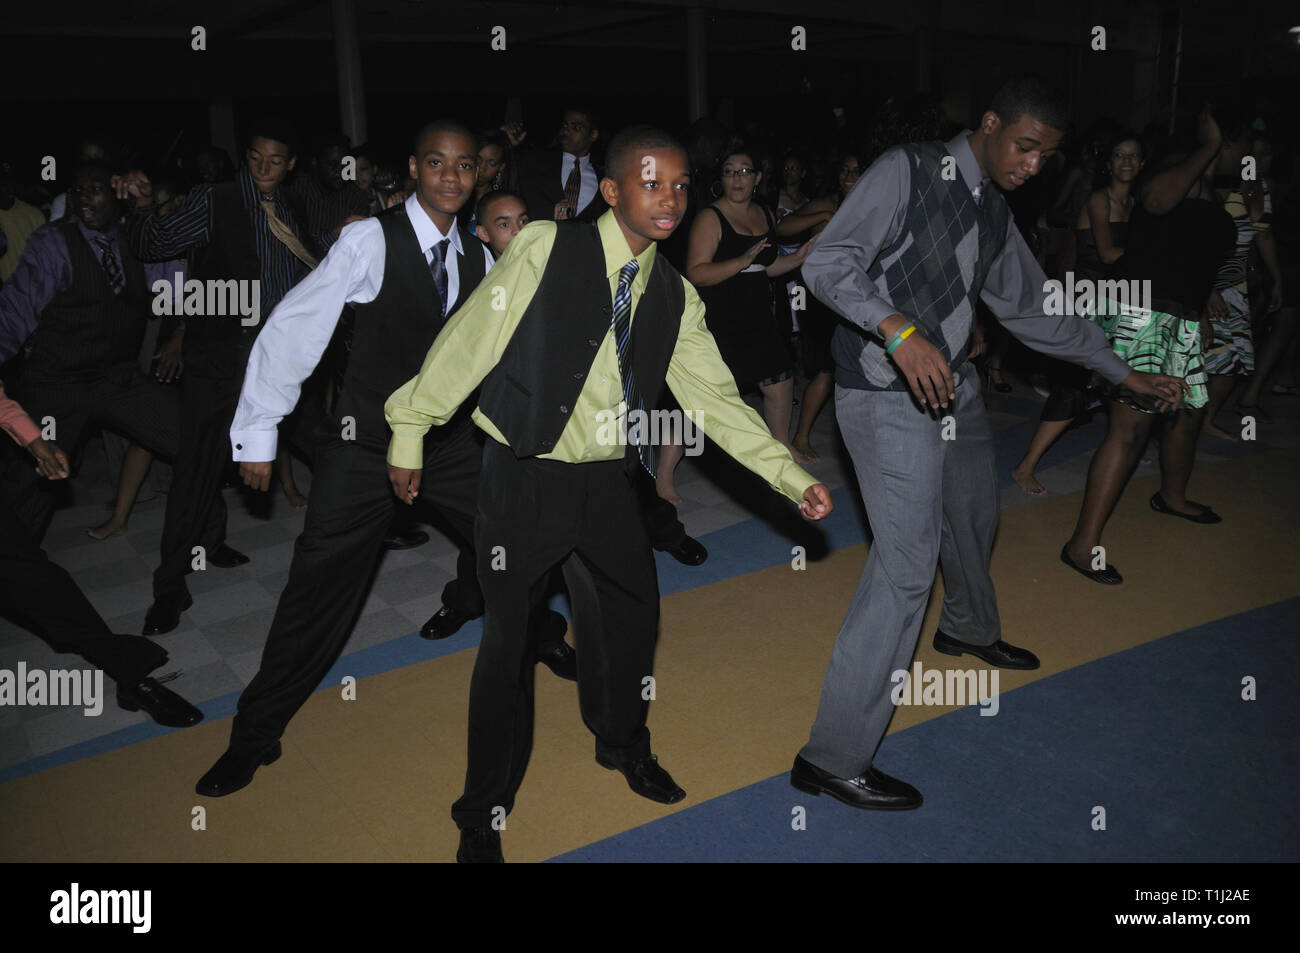 Teens dancing at a high school dance Banque D'Images